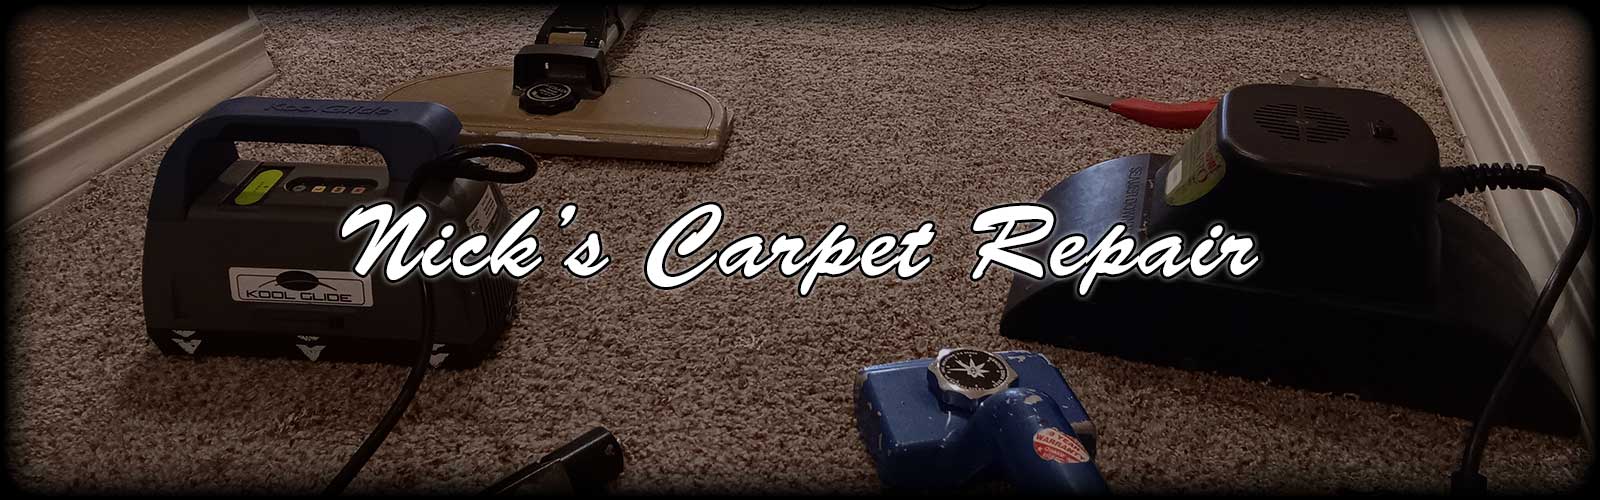 assets/images/causes/slider/nicks-carpet-repair-banner